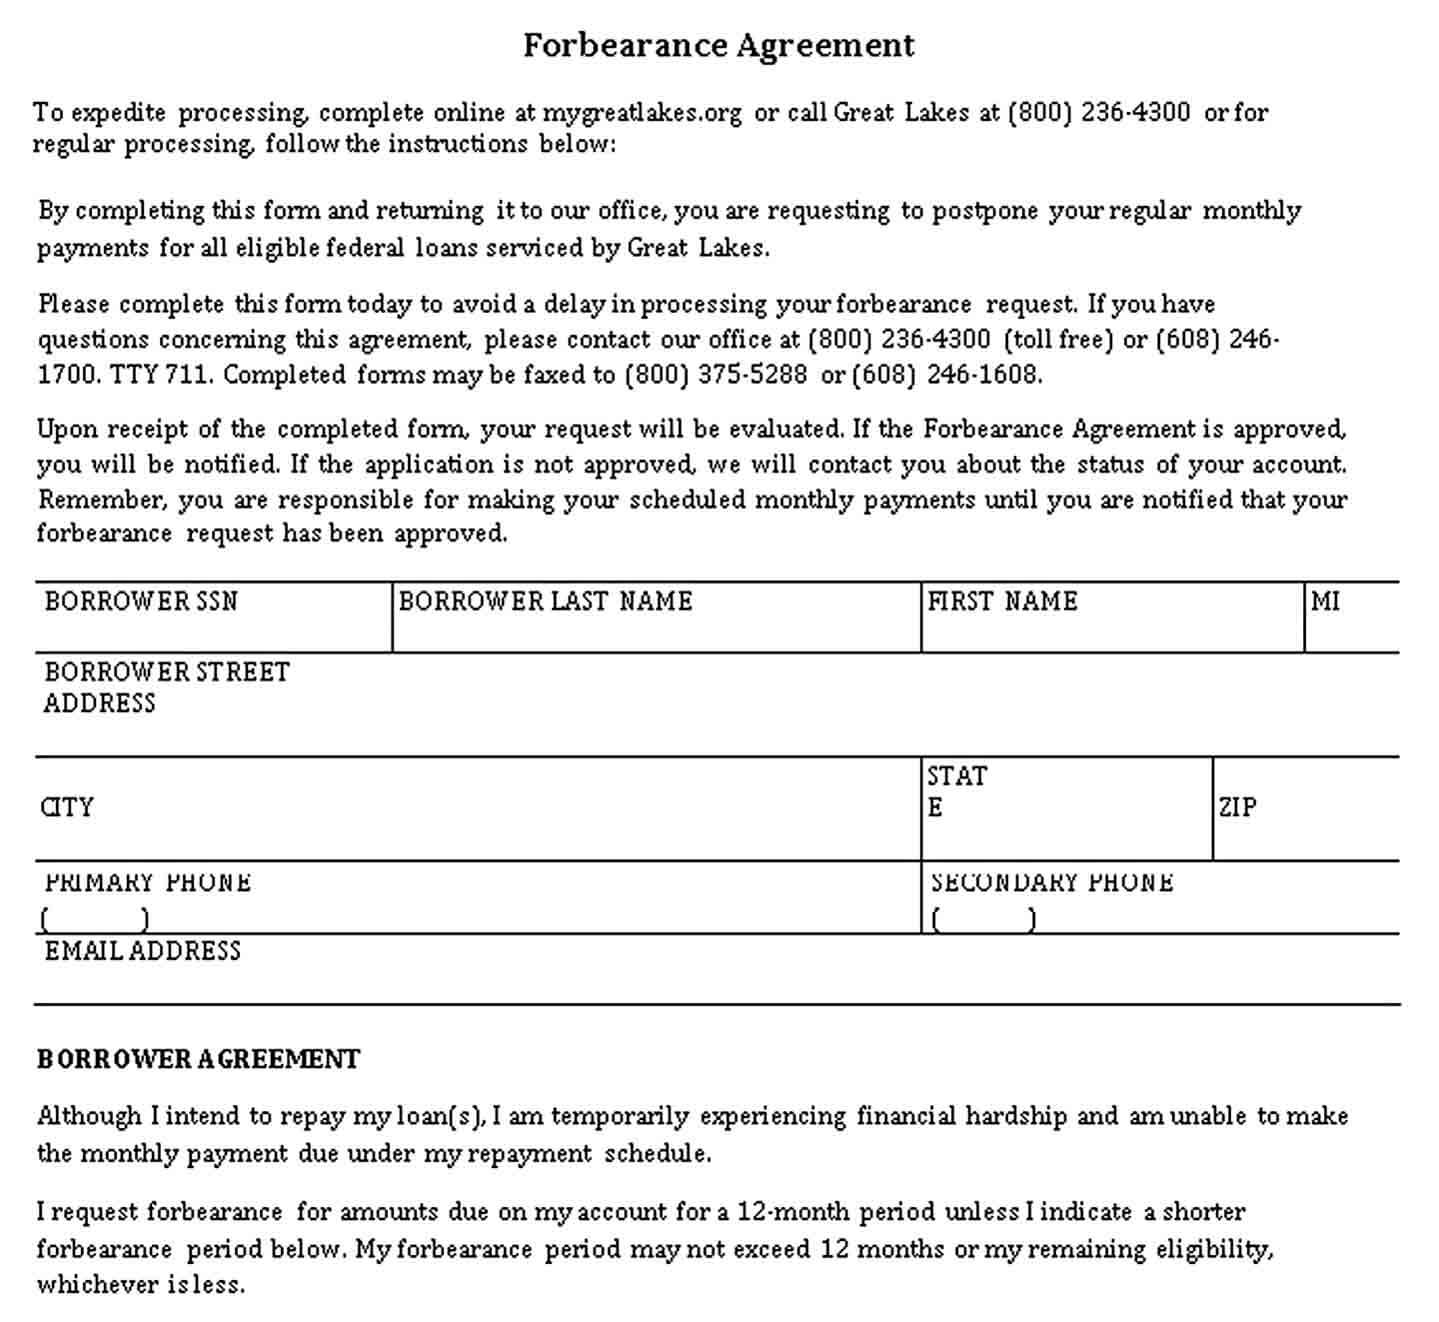 Sample Forbearance Agreement Format